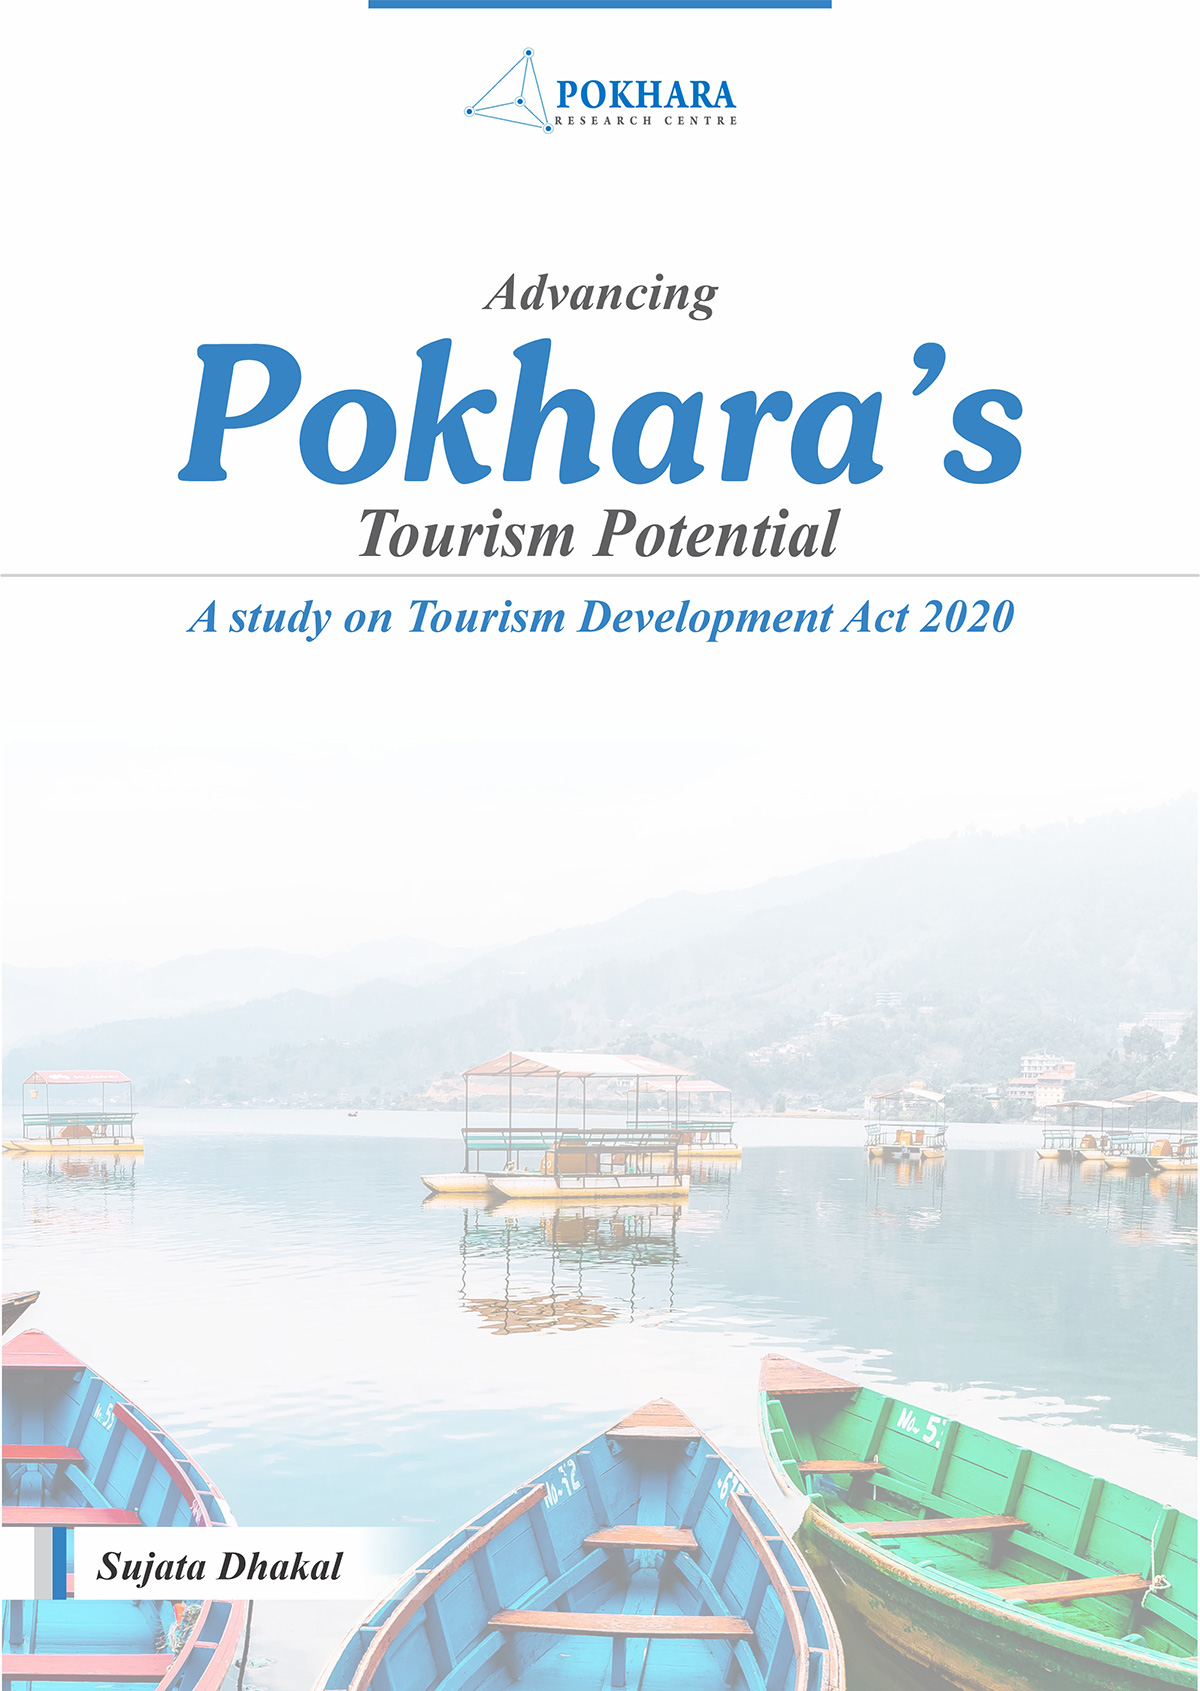 tourism board pokhara